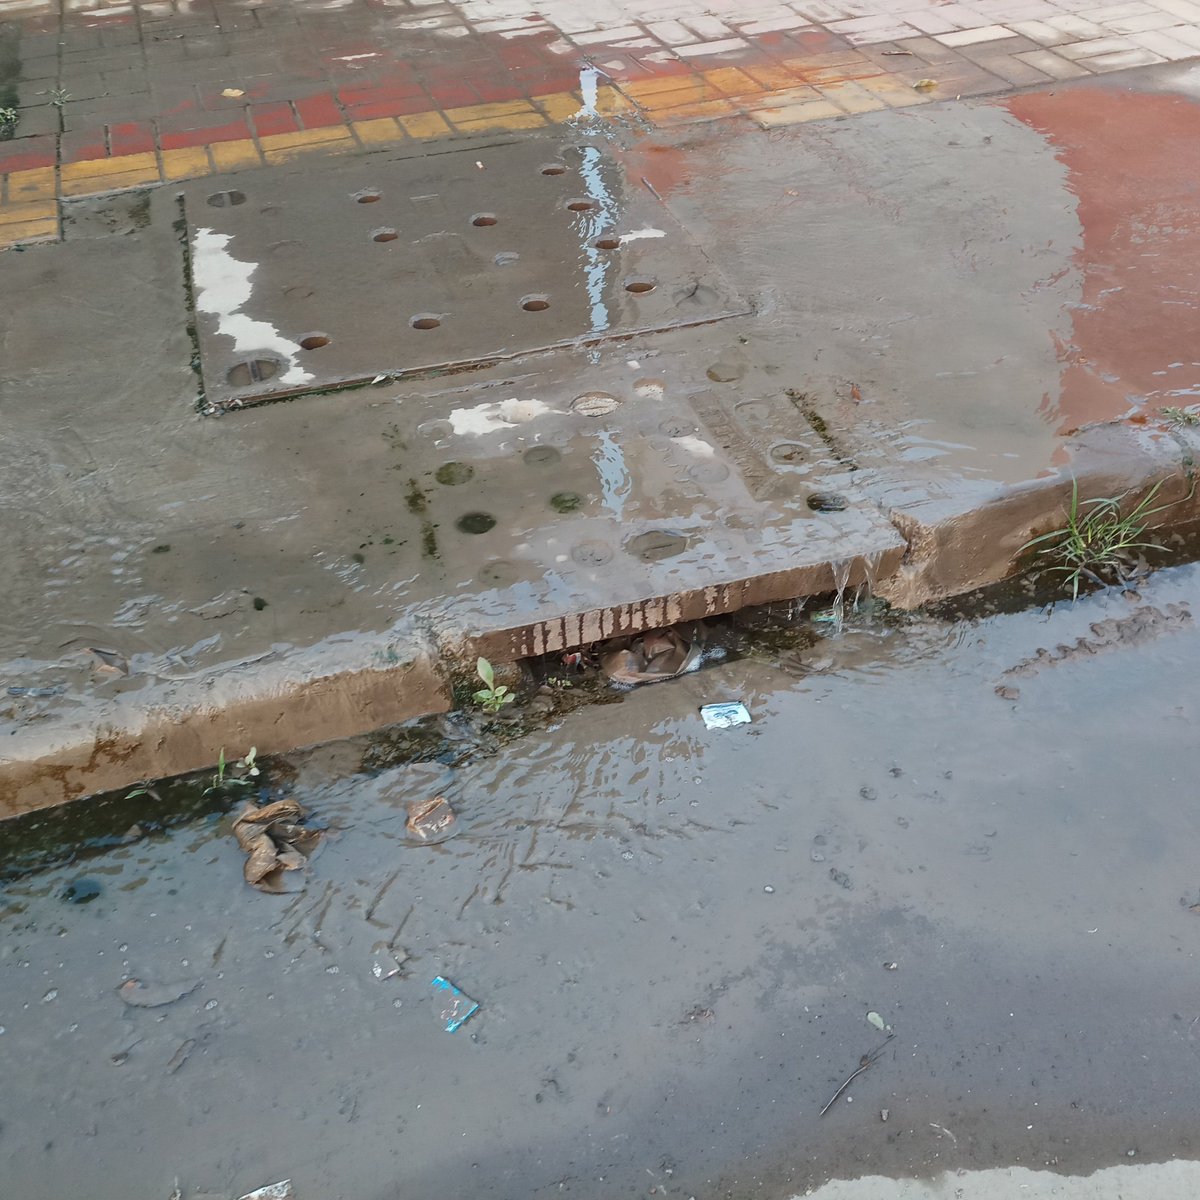 Lots of water wastage opposite of gera greenville... Avencia project side... @MkulkarniMilind @SatishJoshi_1 @PMCPune @hashPune @CleanKharadi @KhswaPune